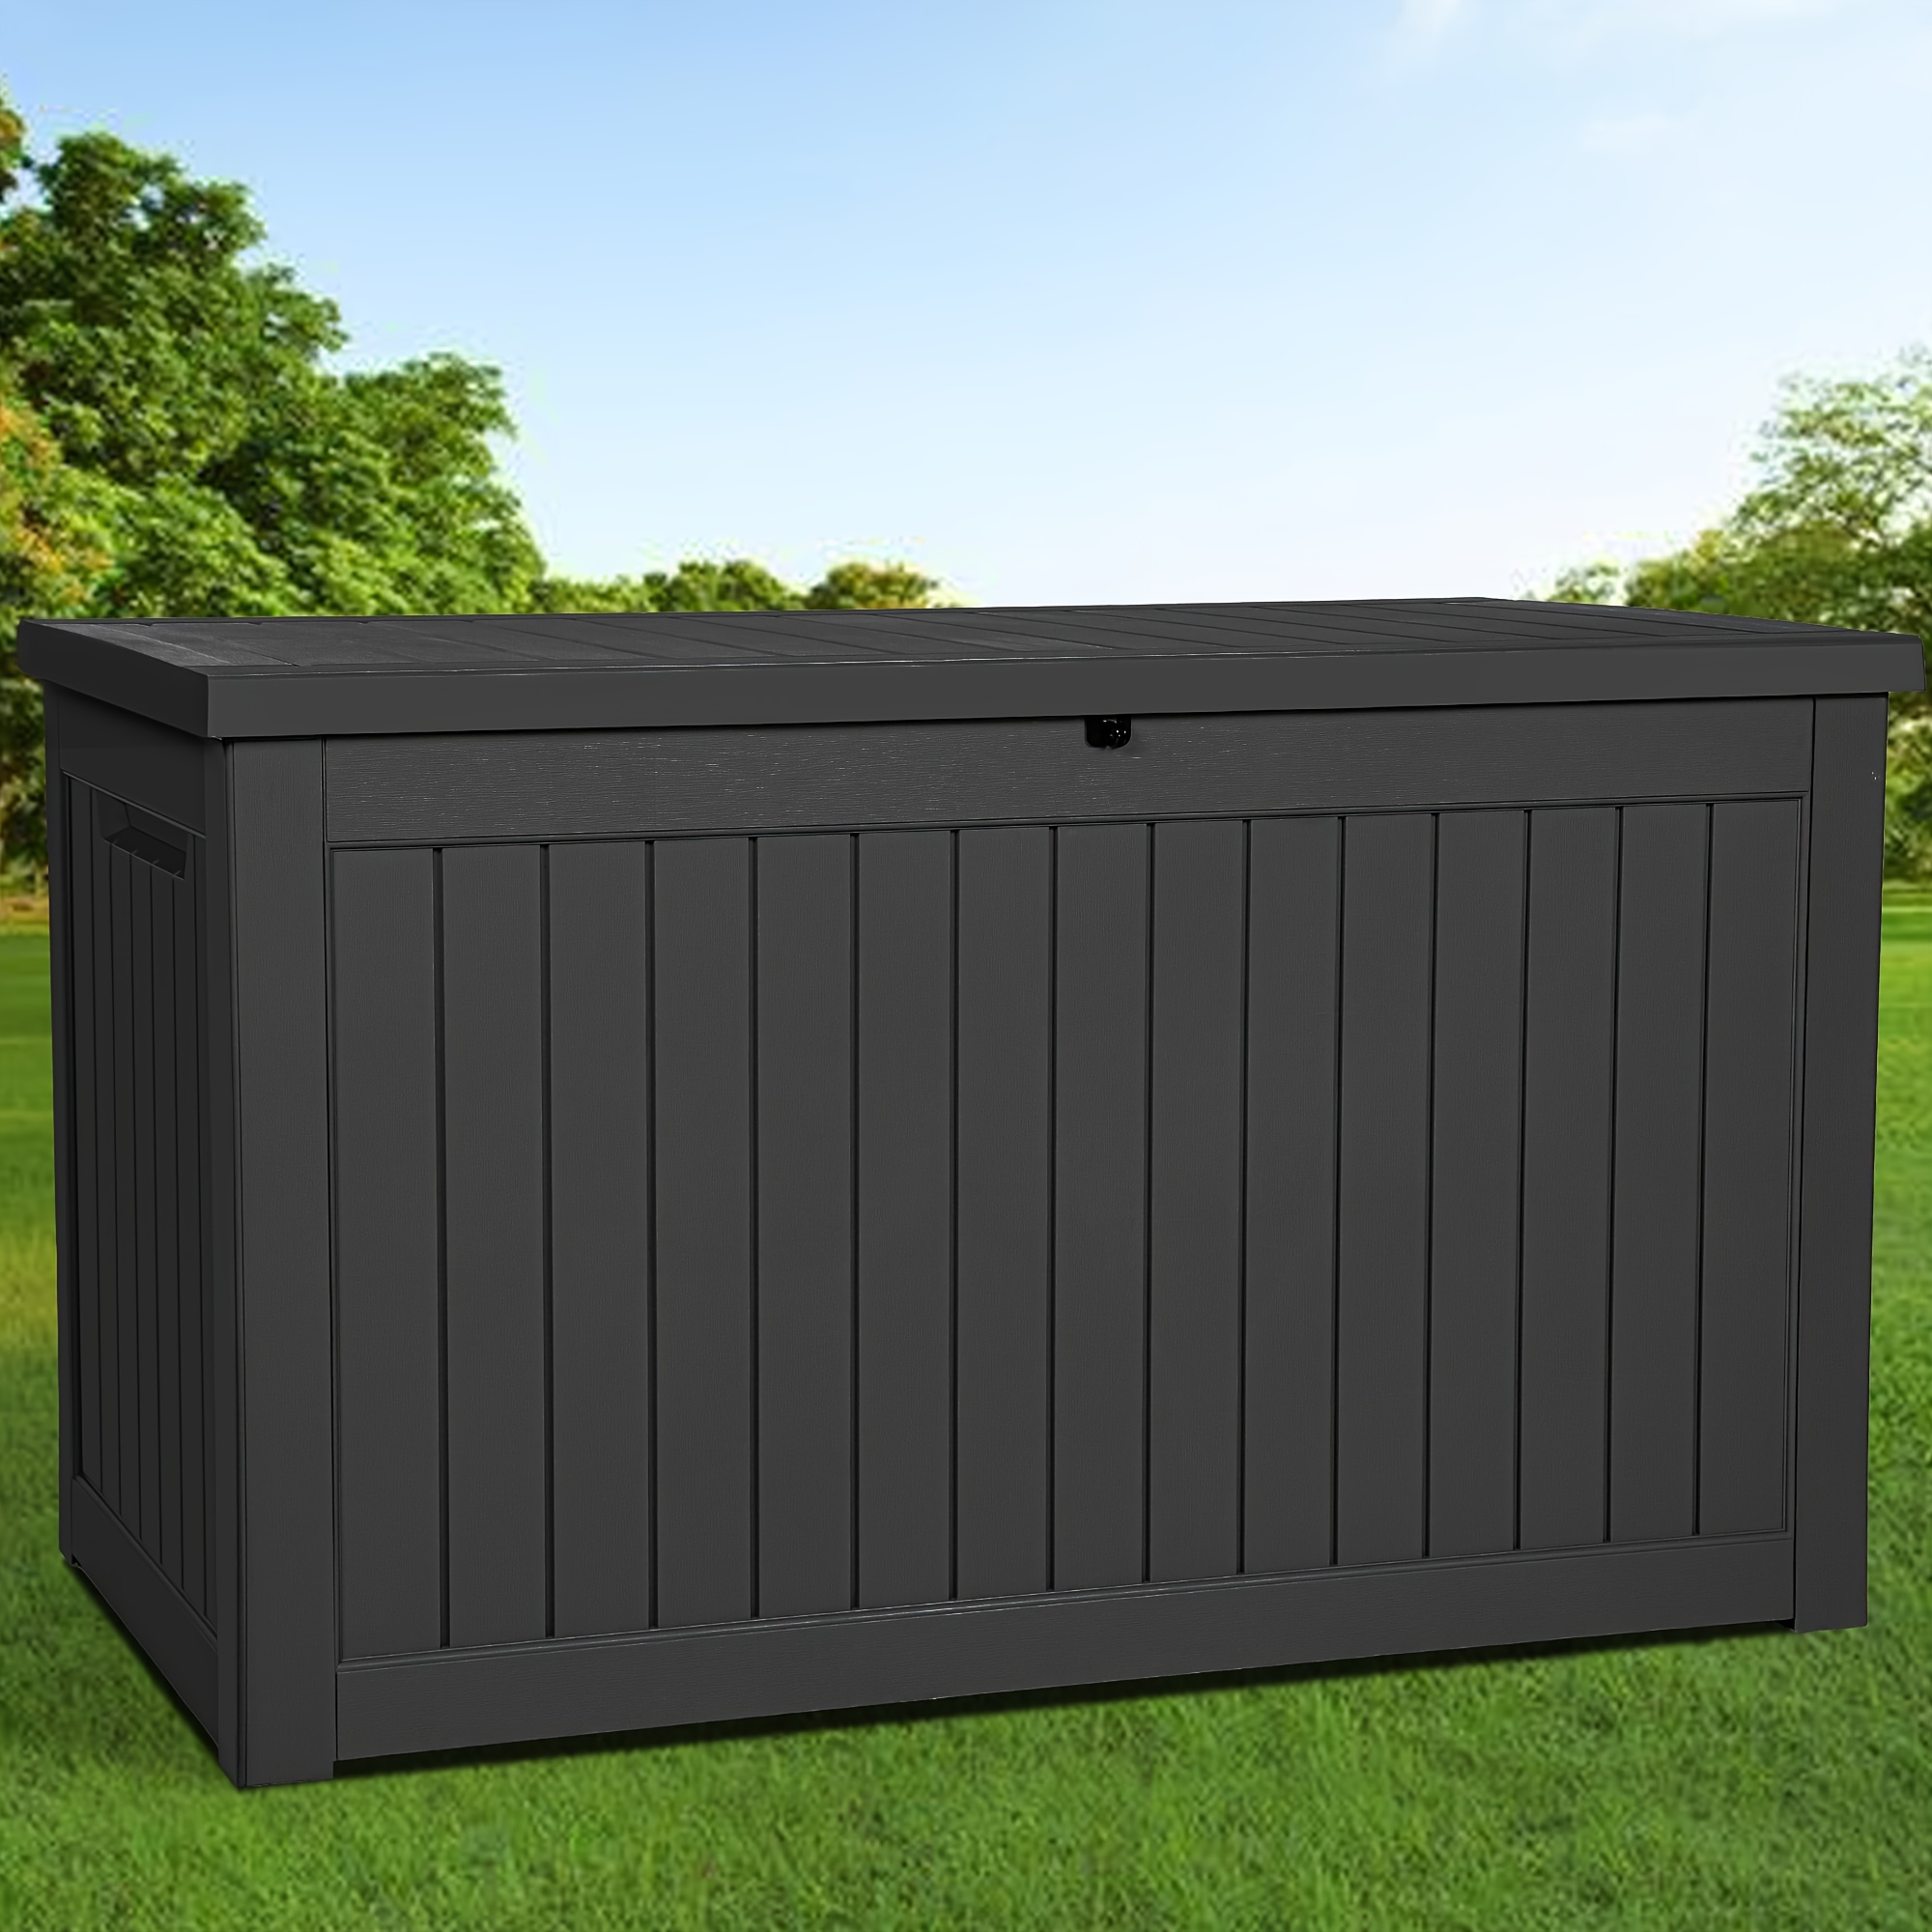 

Homiflex Xxl Large 230 Gallon Resin Deck Storage Container Box Outdoor Patio Garden Black, Resin, Lockable (black)